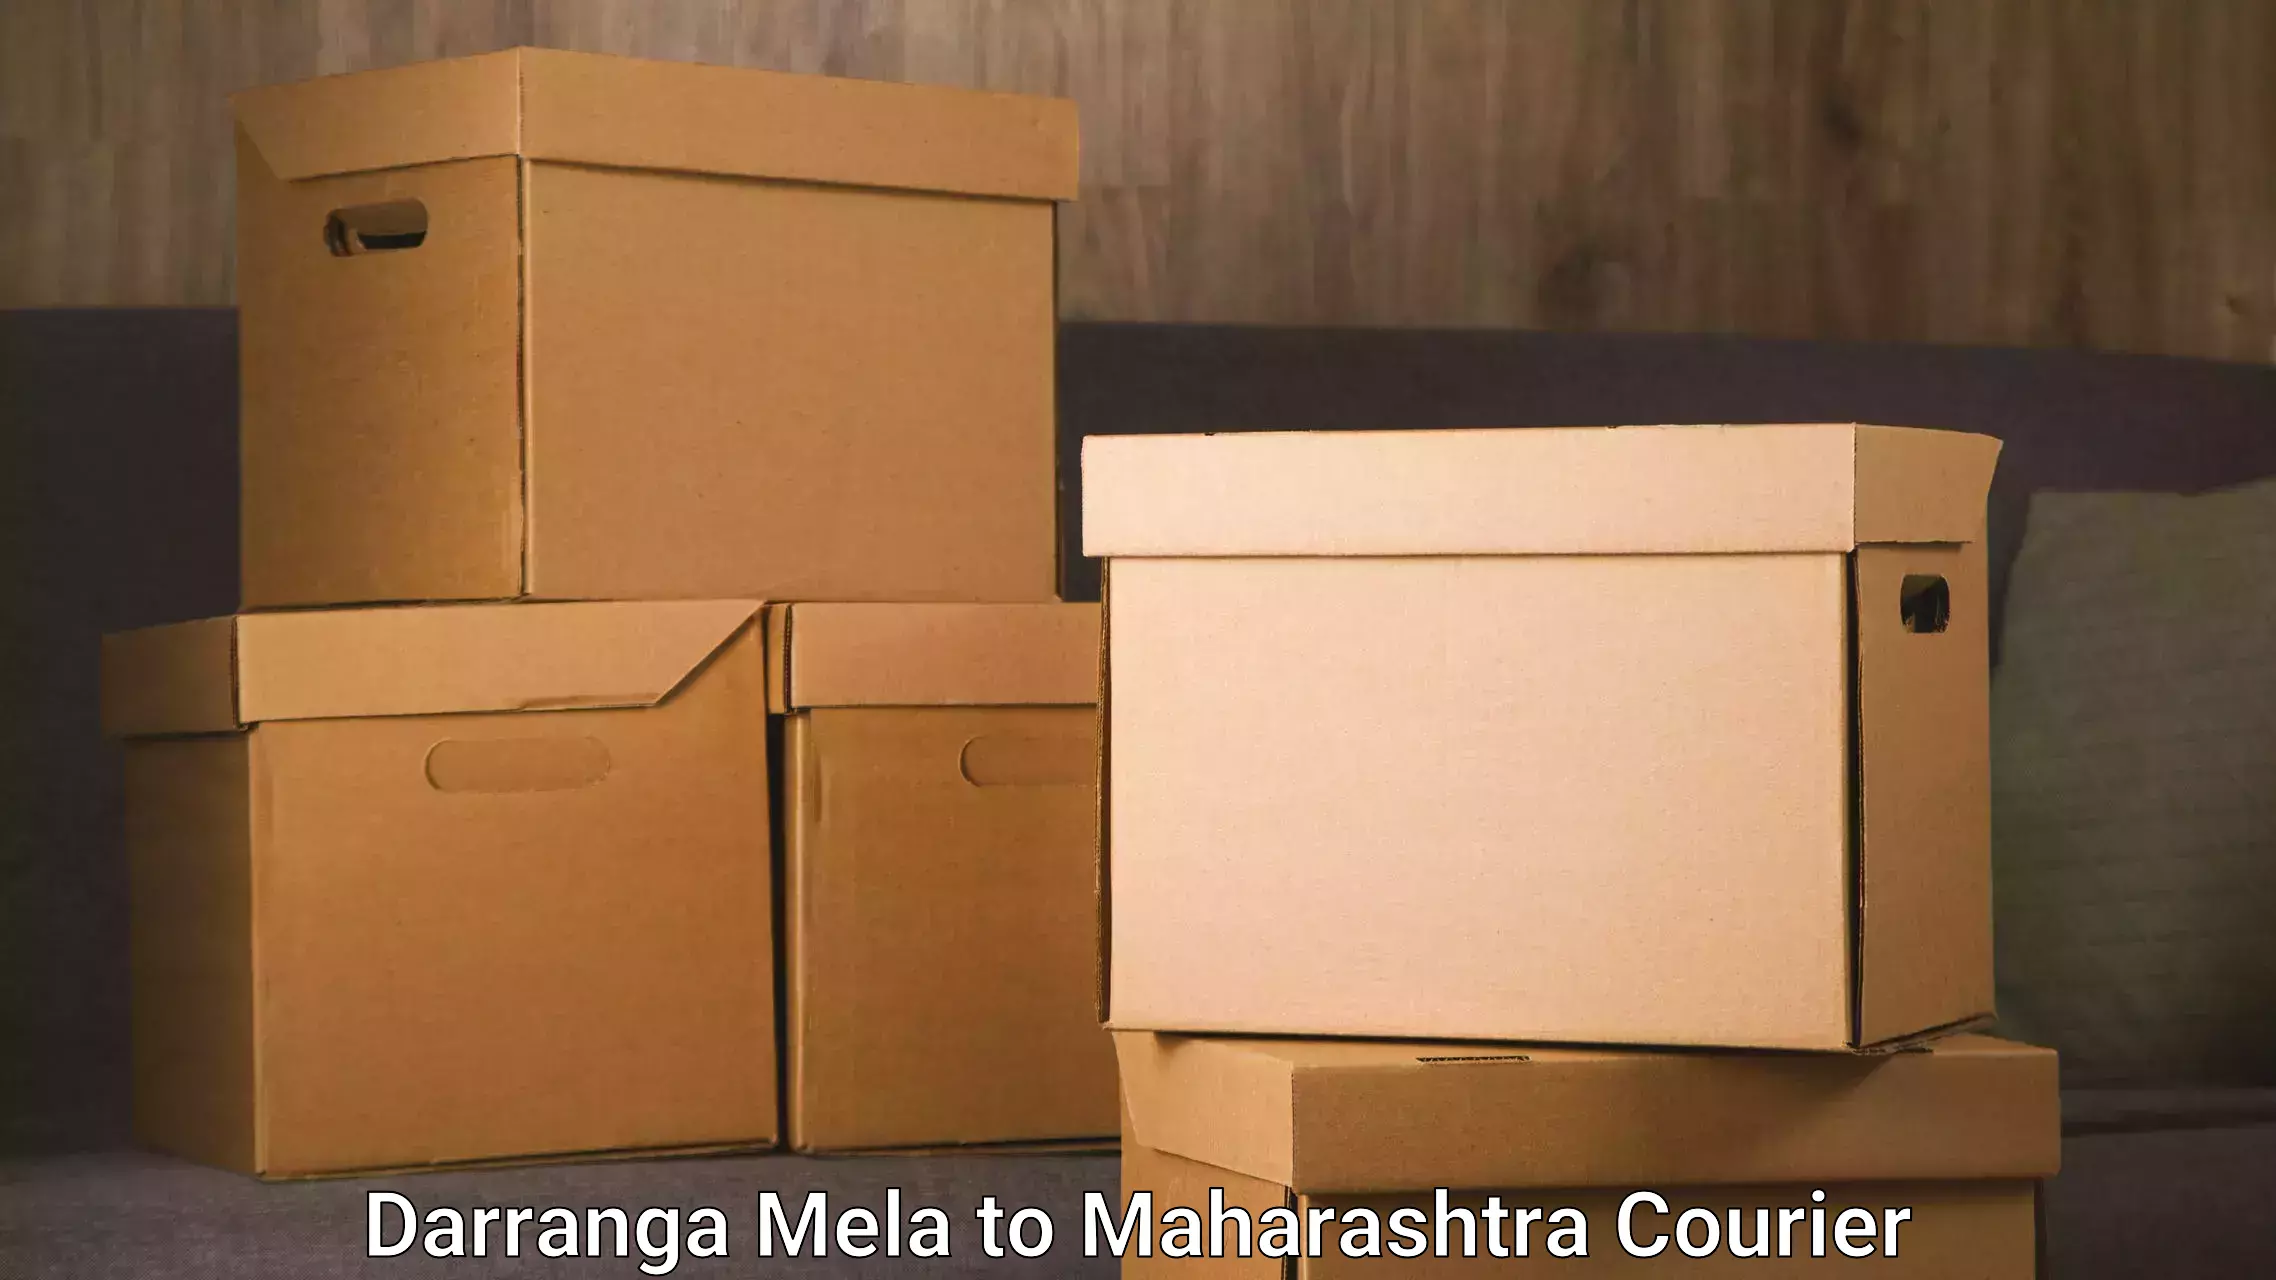 Courier service partnerships Darranga Mela to Chinchbunder